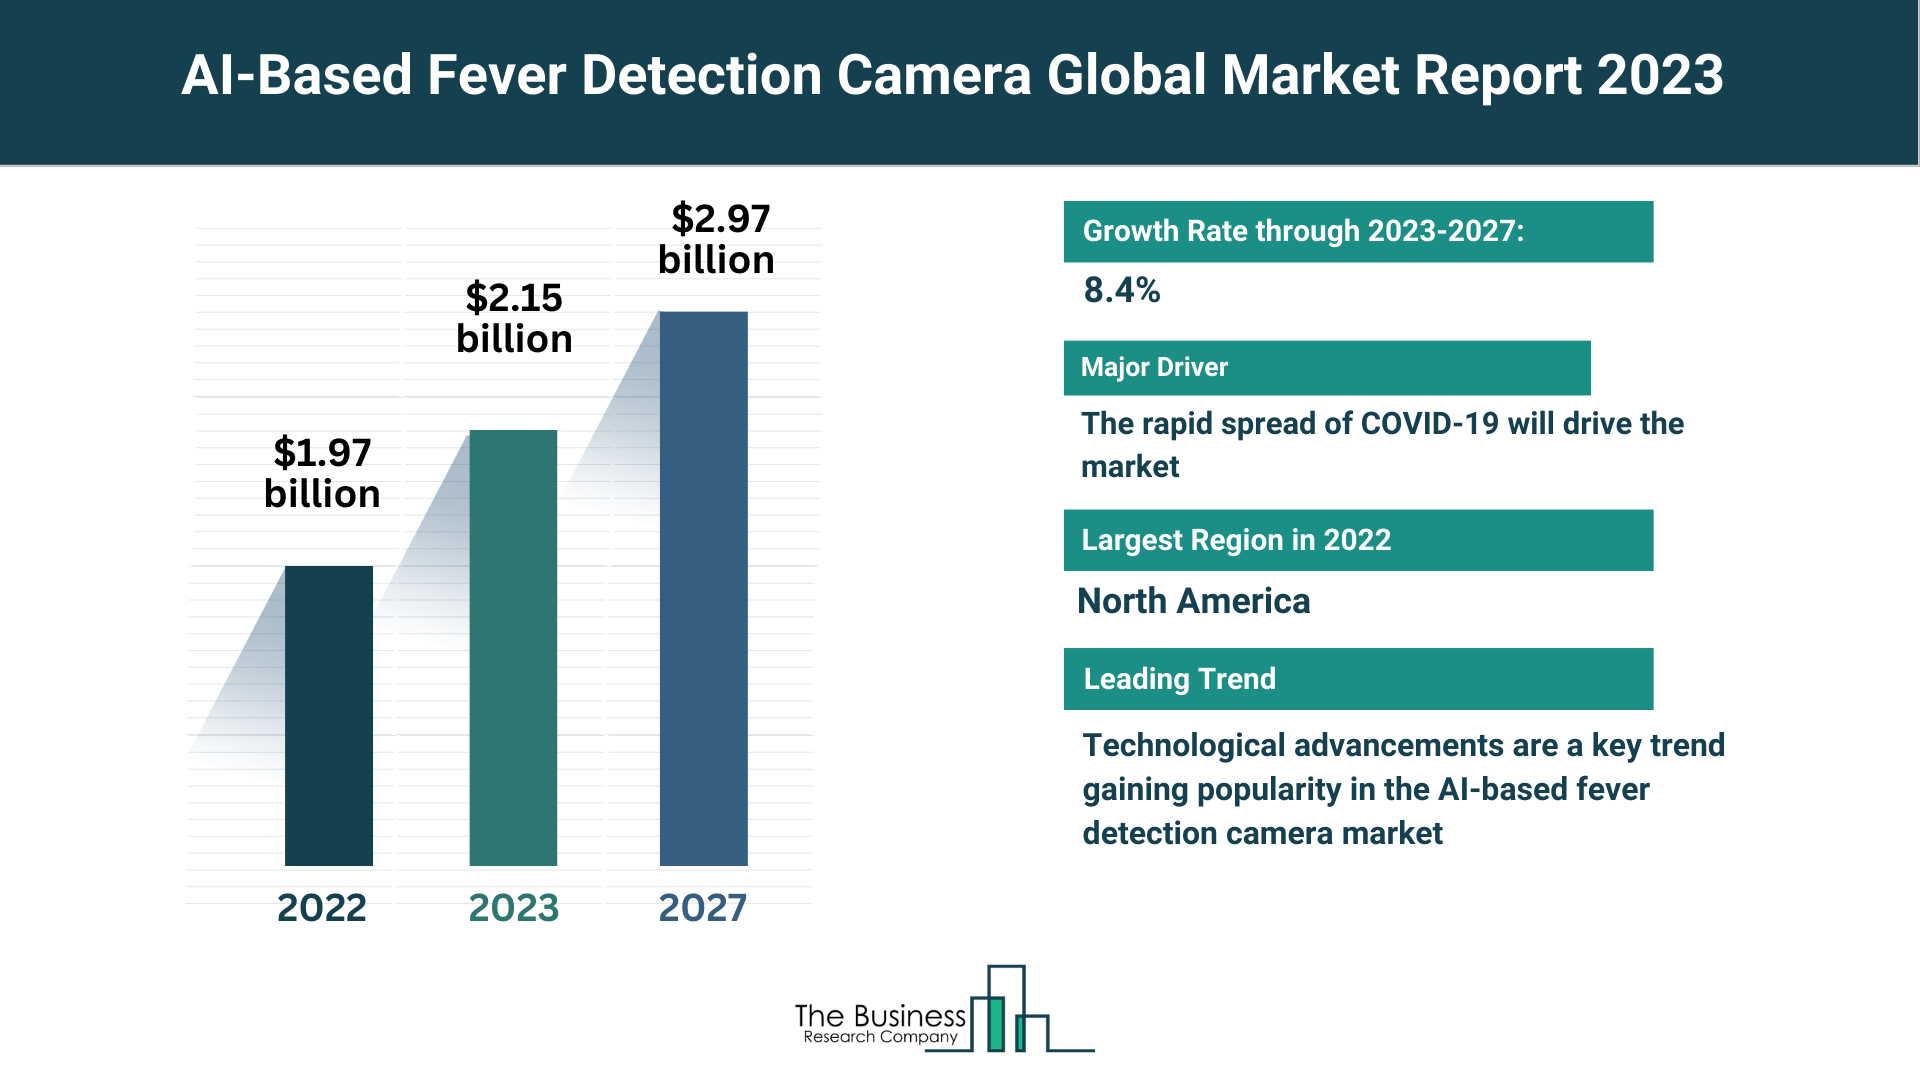 Global AI-Based Fever Detection Camera Market